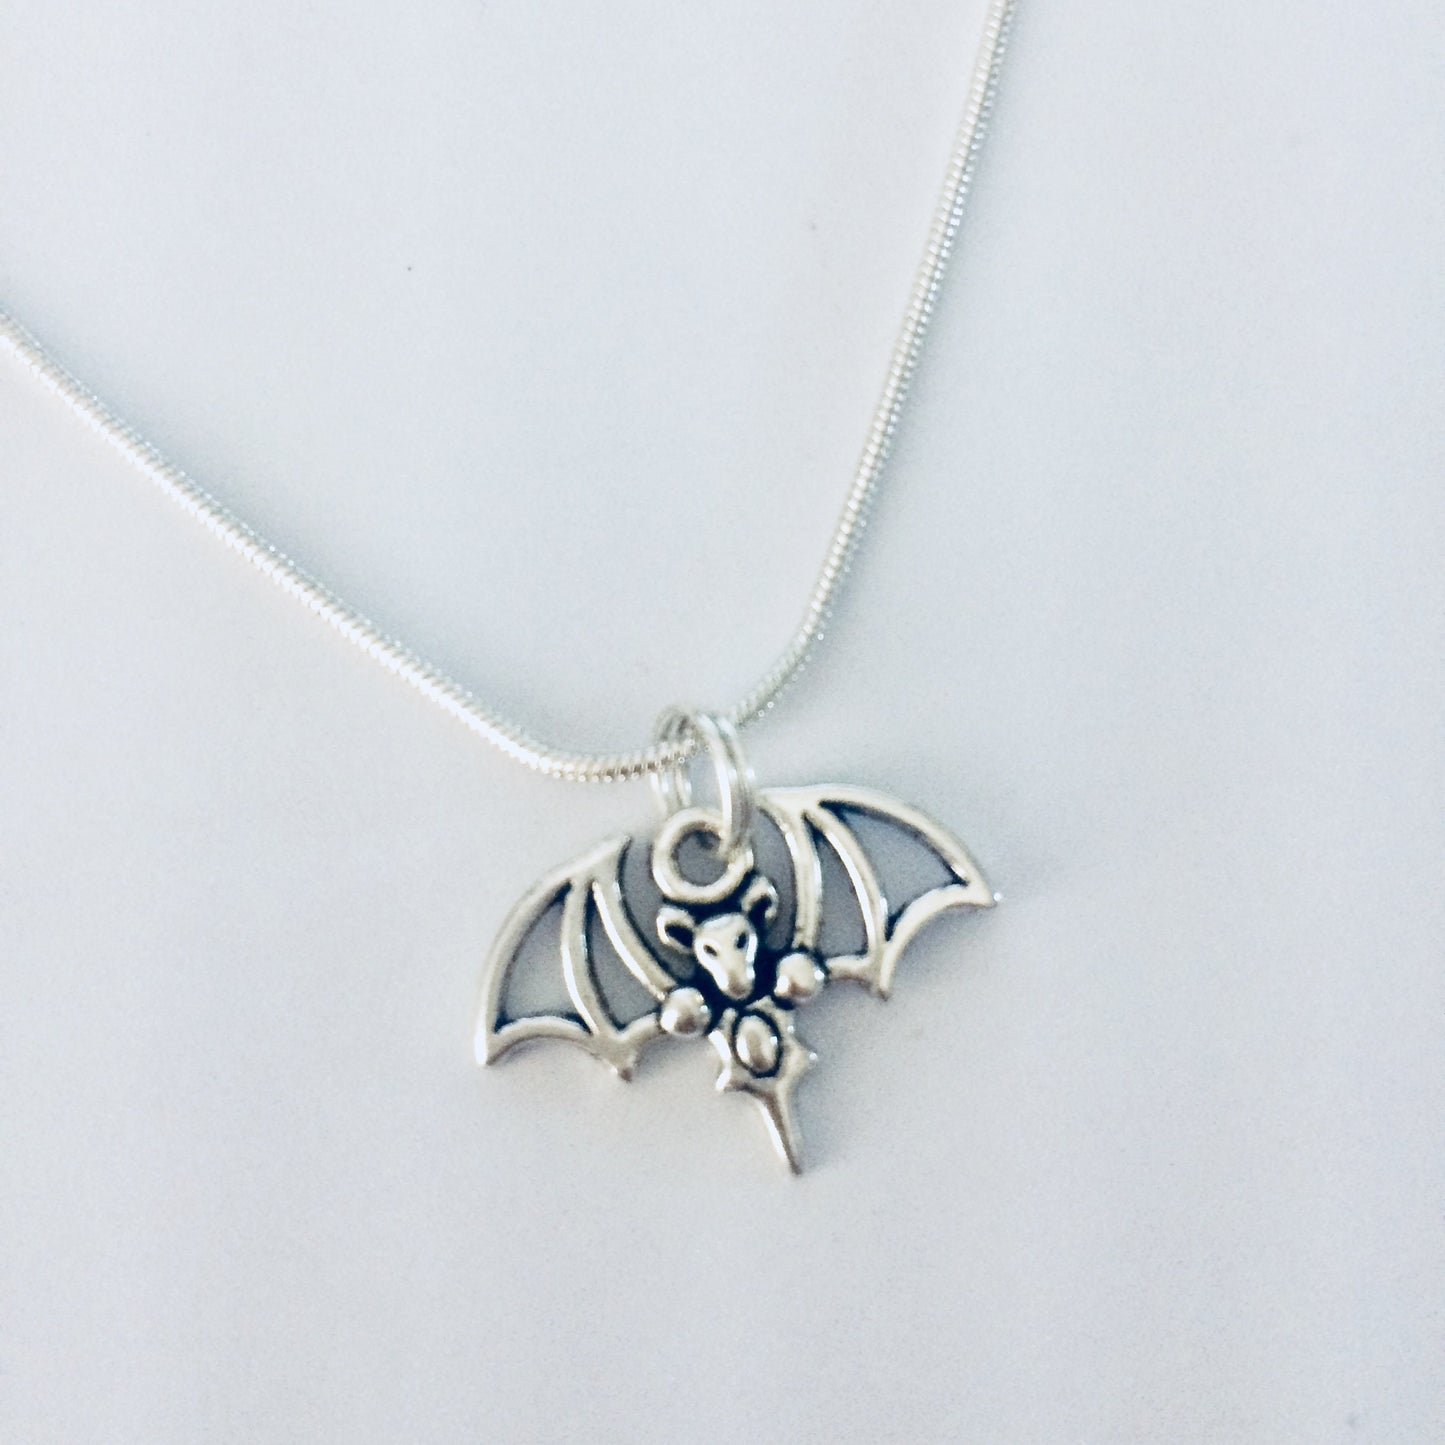 Bat Necklace, Witchy Necklace, Halloween Necklace, Bat Charm Necklace, Vampire Necklace, Vampire Jewellery, Vampire Bat, Bat Jewelry.